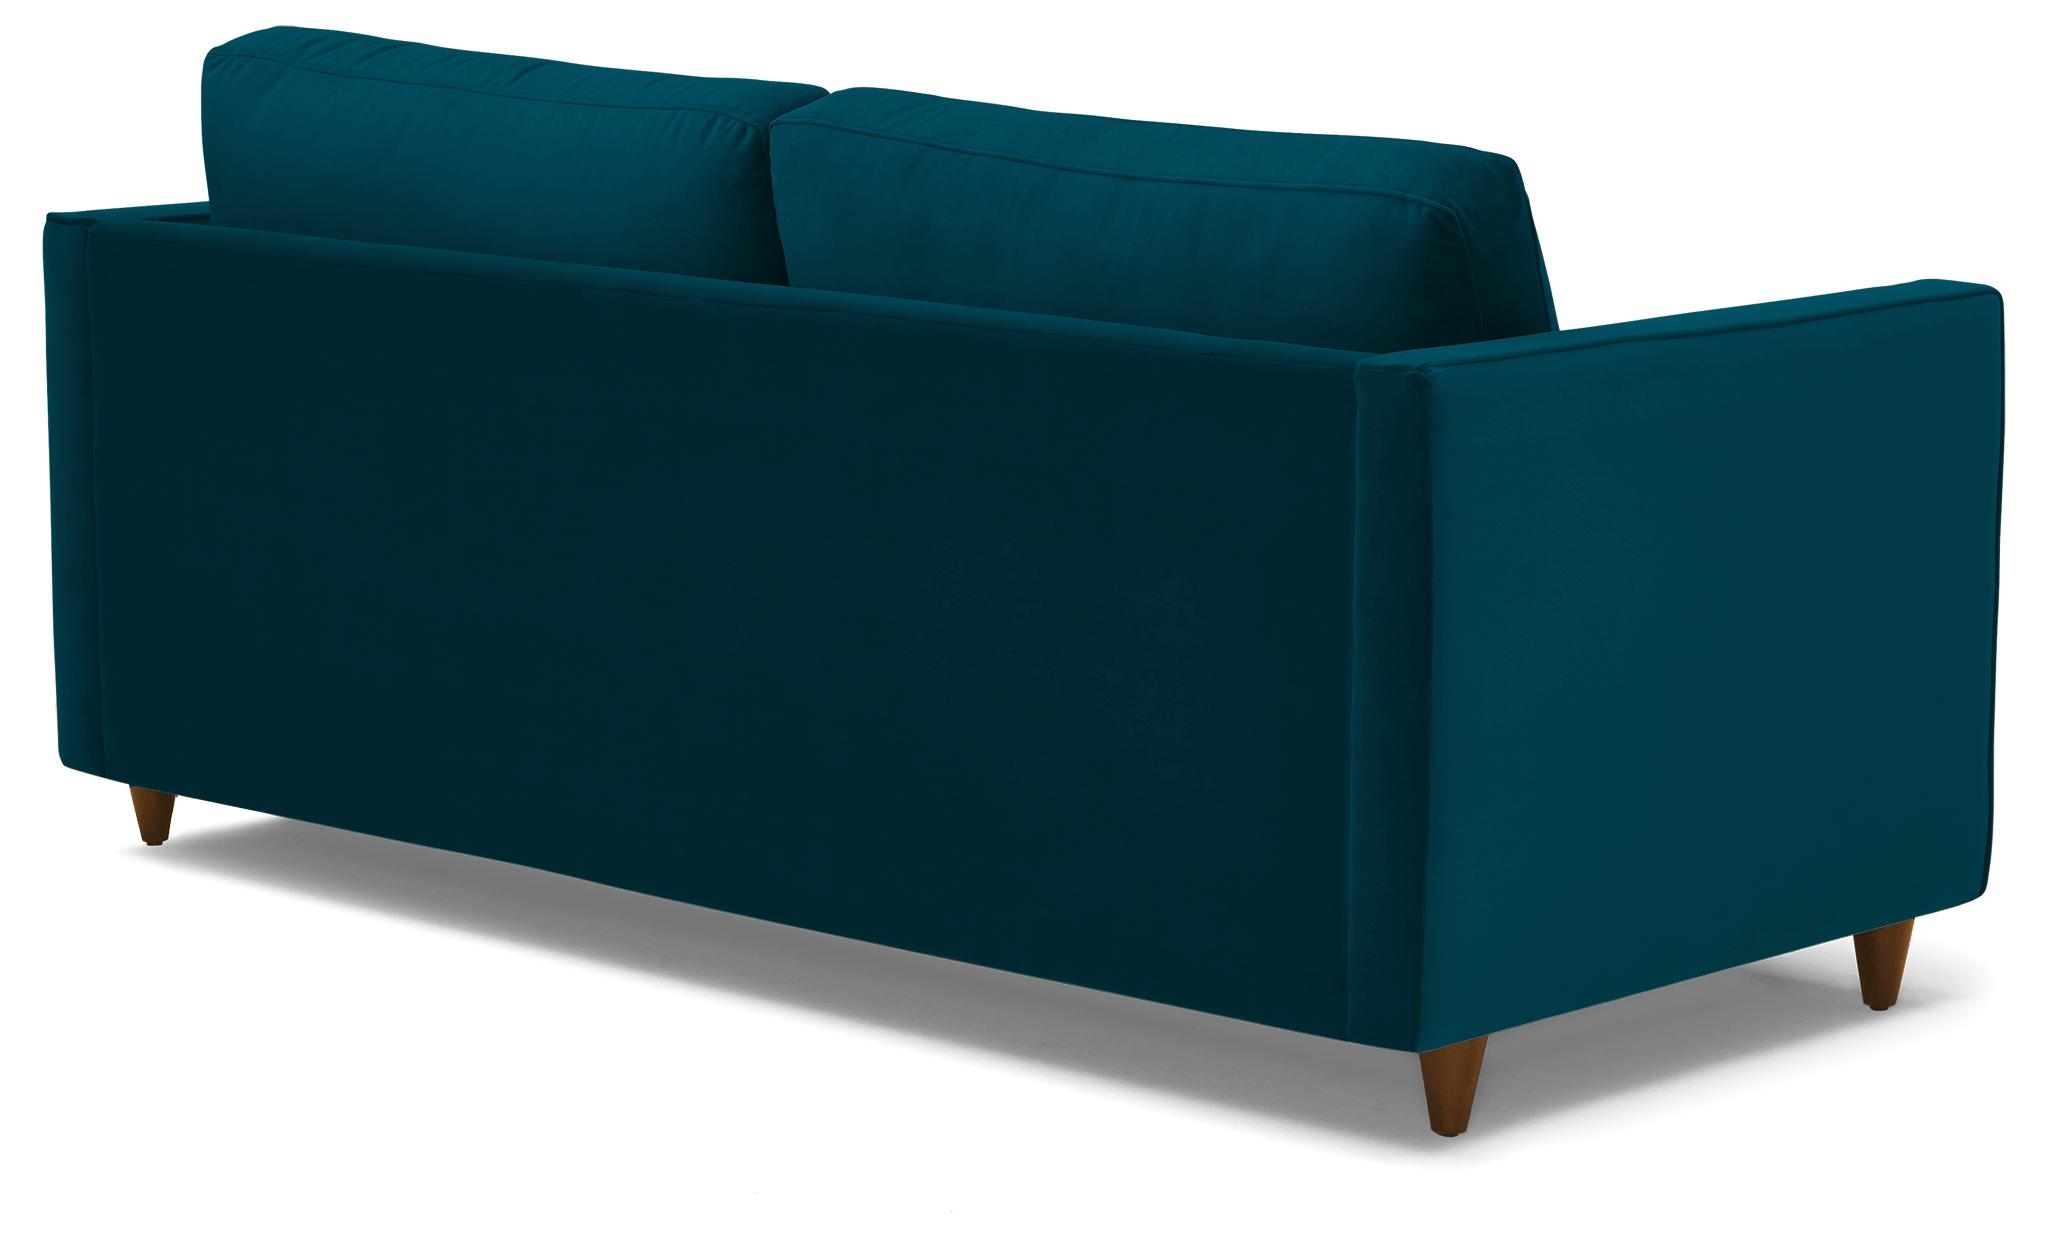 Blue Briar Mid Century Modern Sleeper Sofa - Key Largo Zenith Teal - Mocha - Image 3